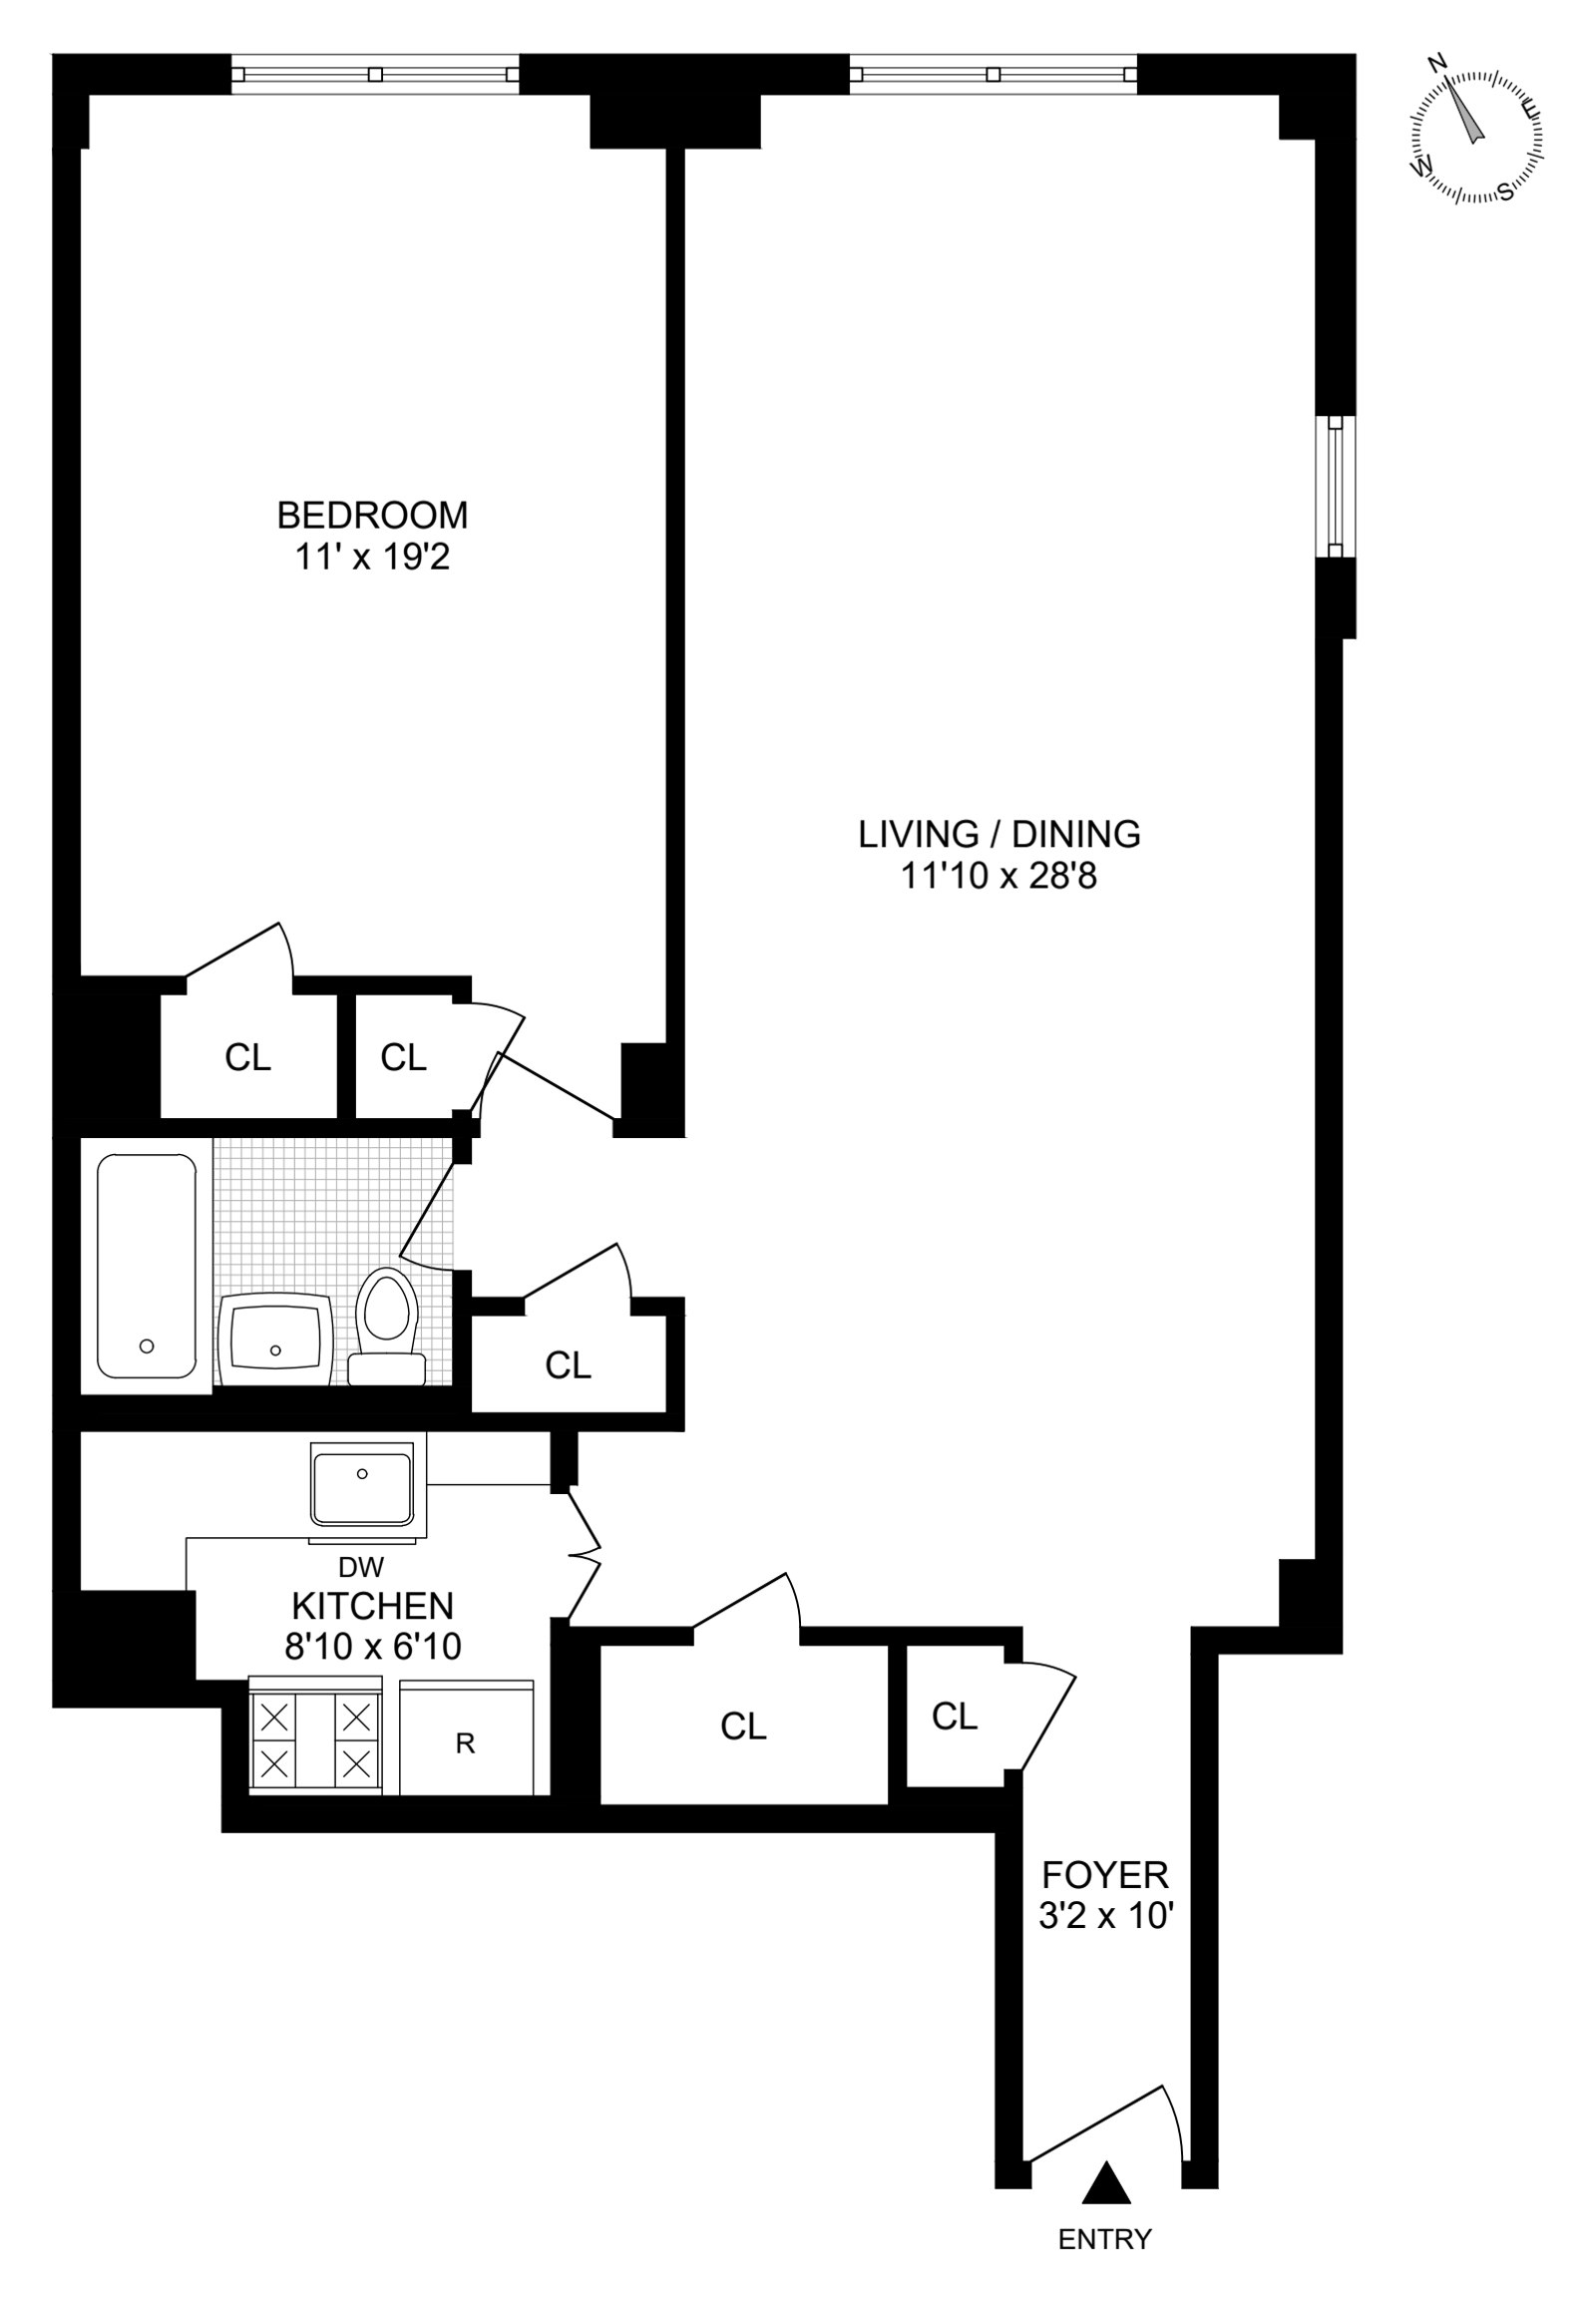 Floorplan for 301 East 62nd Street, 3A